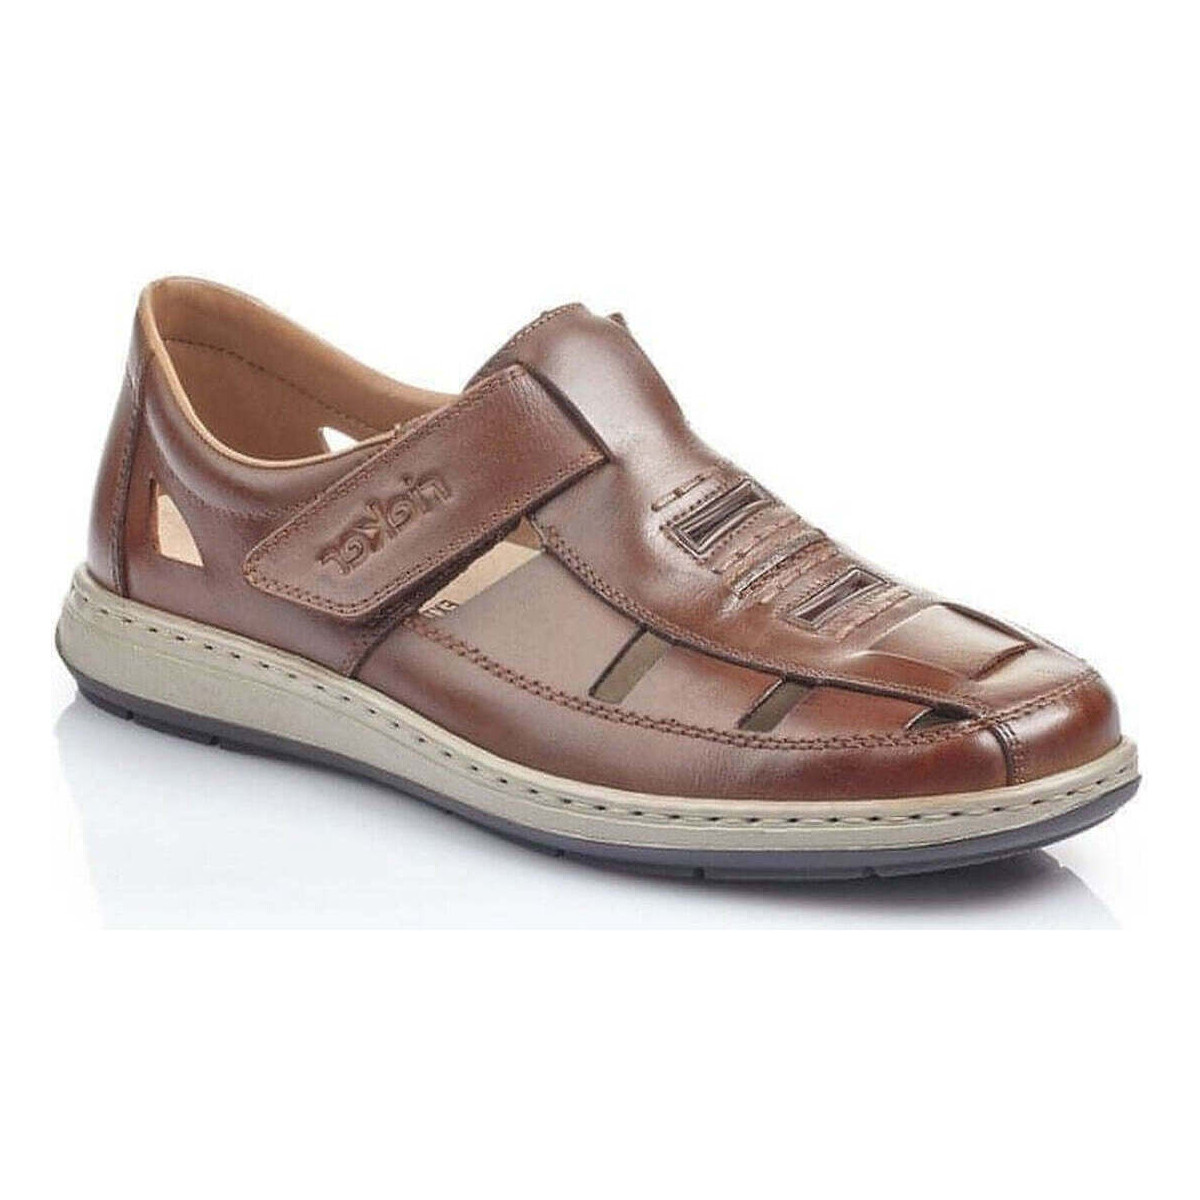 Chaussures Homme Sandales sport Rieker brown casual part-open sandals Marron